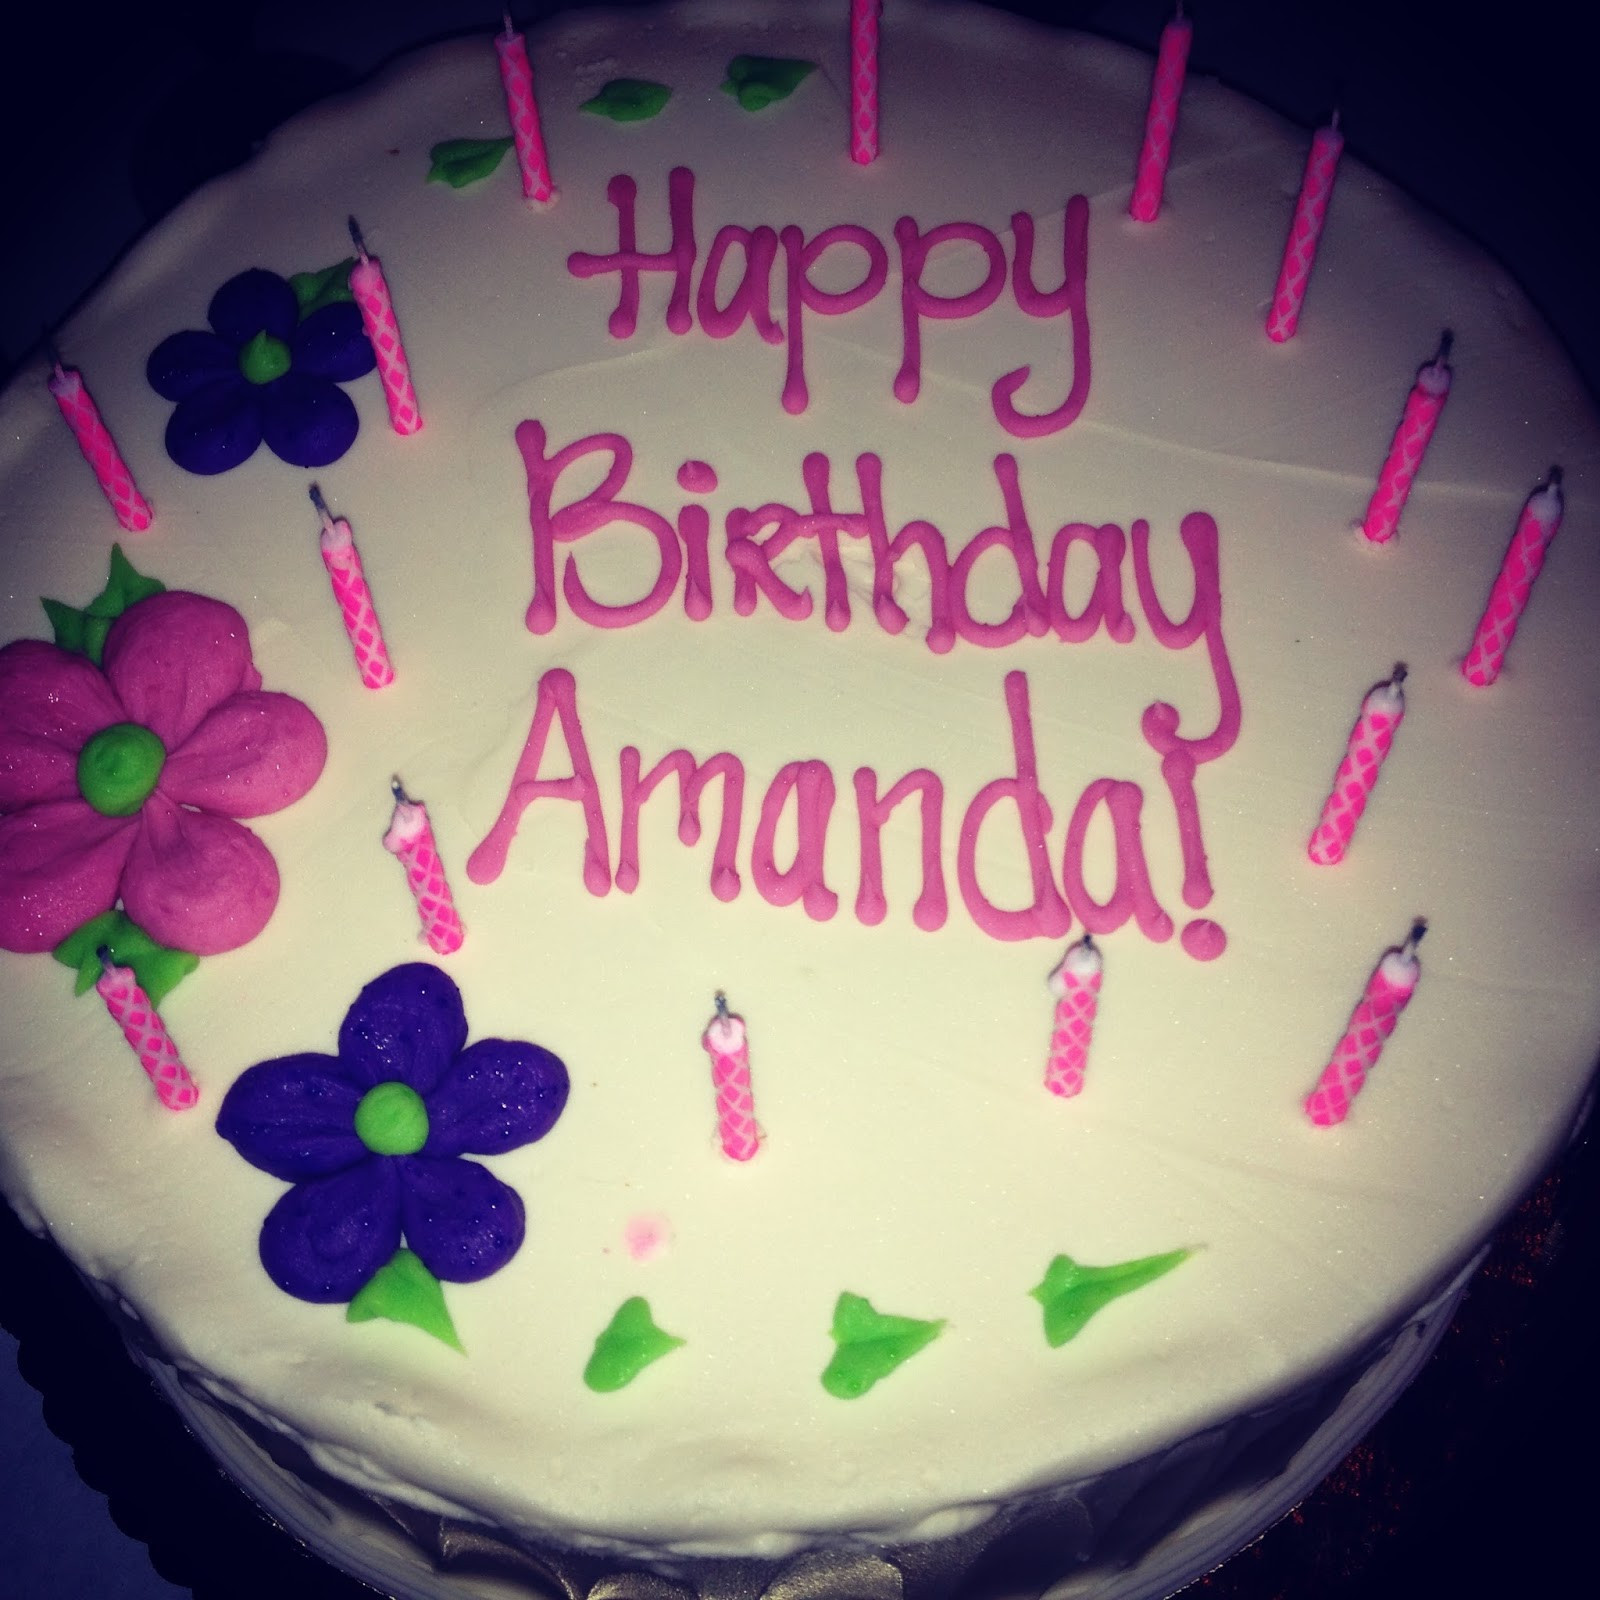 Happy Birthday Amanda Cake
 Birthday Dining Round up